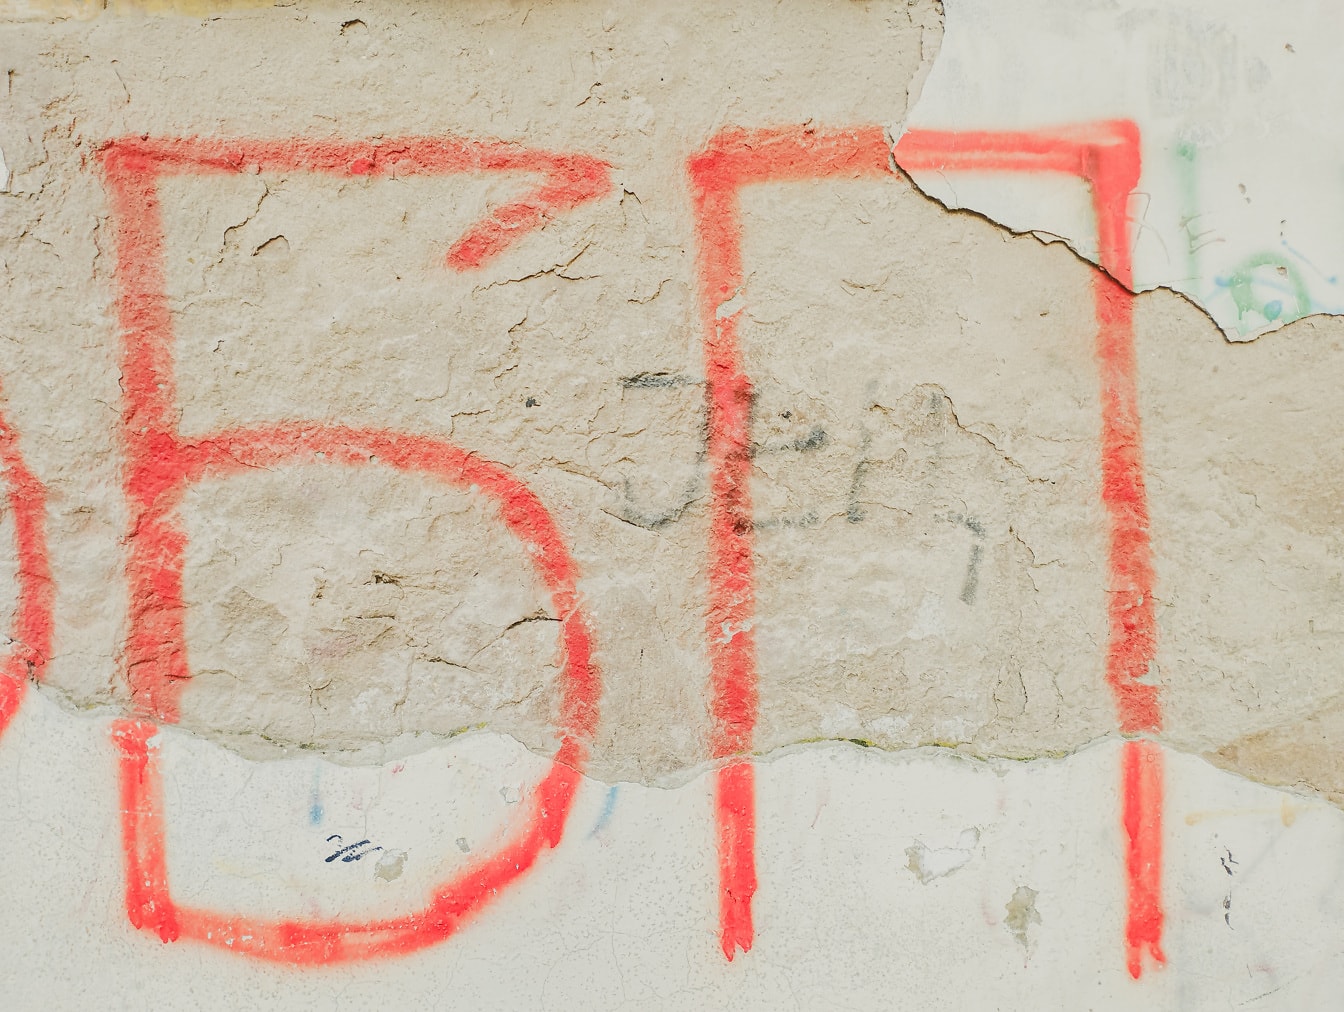 Grafiti teks Cyrillic di dinding tua yang hancur